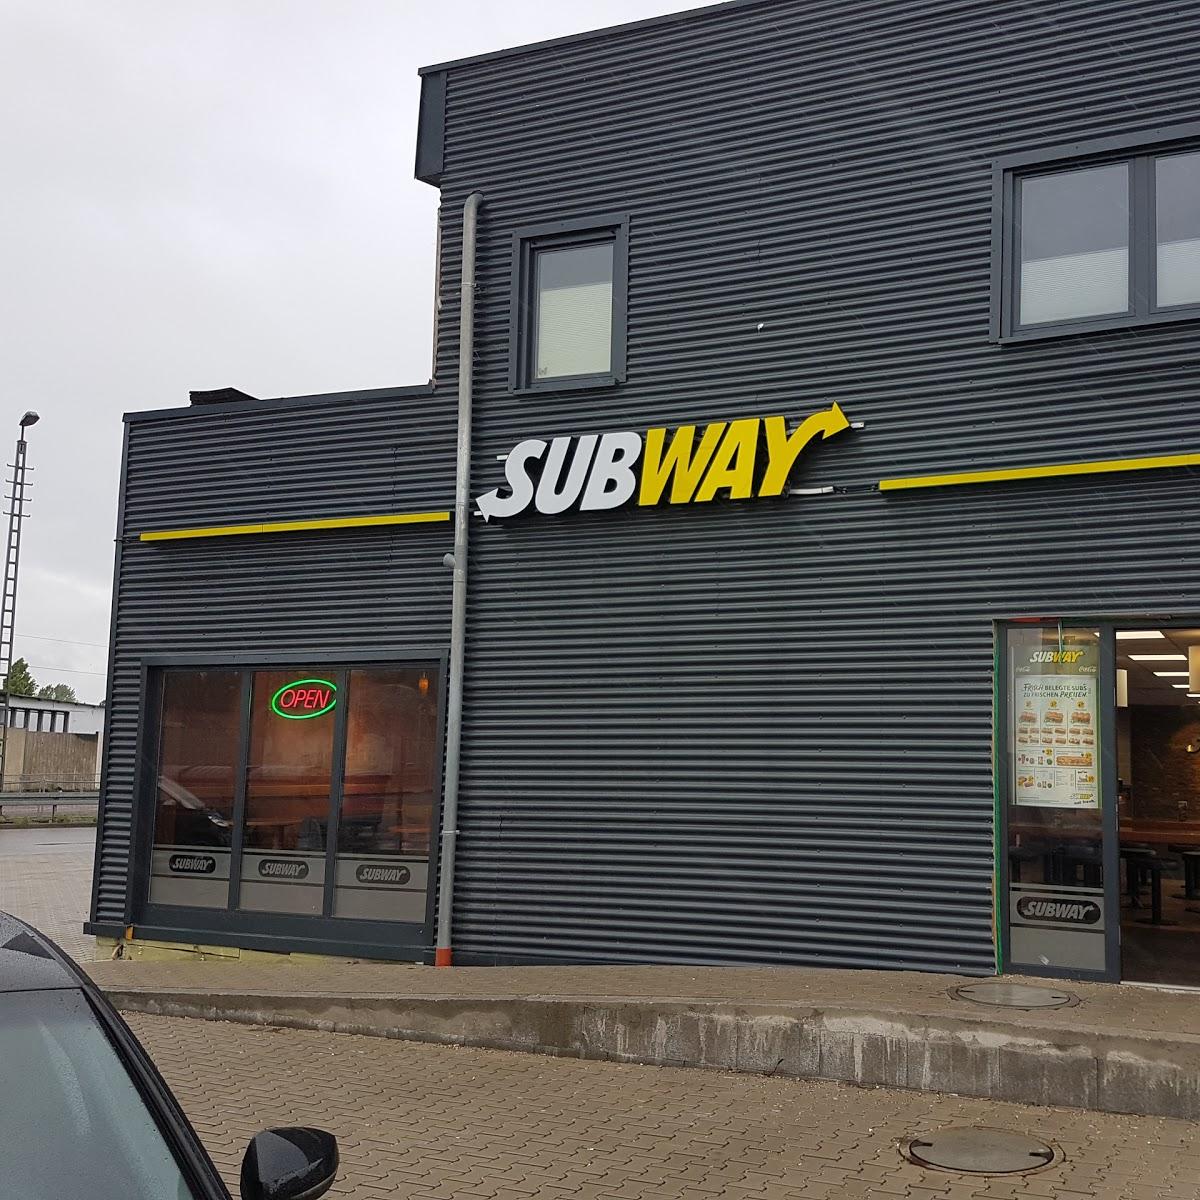 Restaurant "Subway" in Karlsruhe